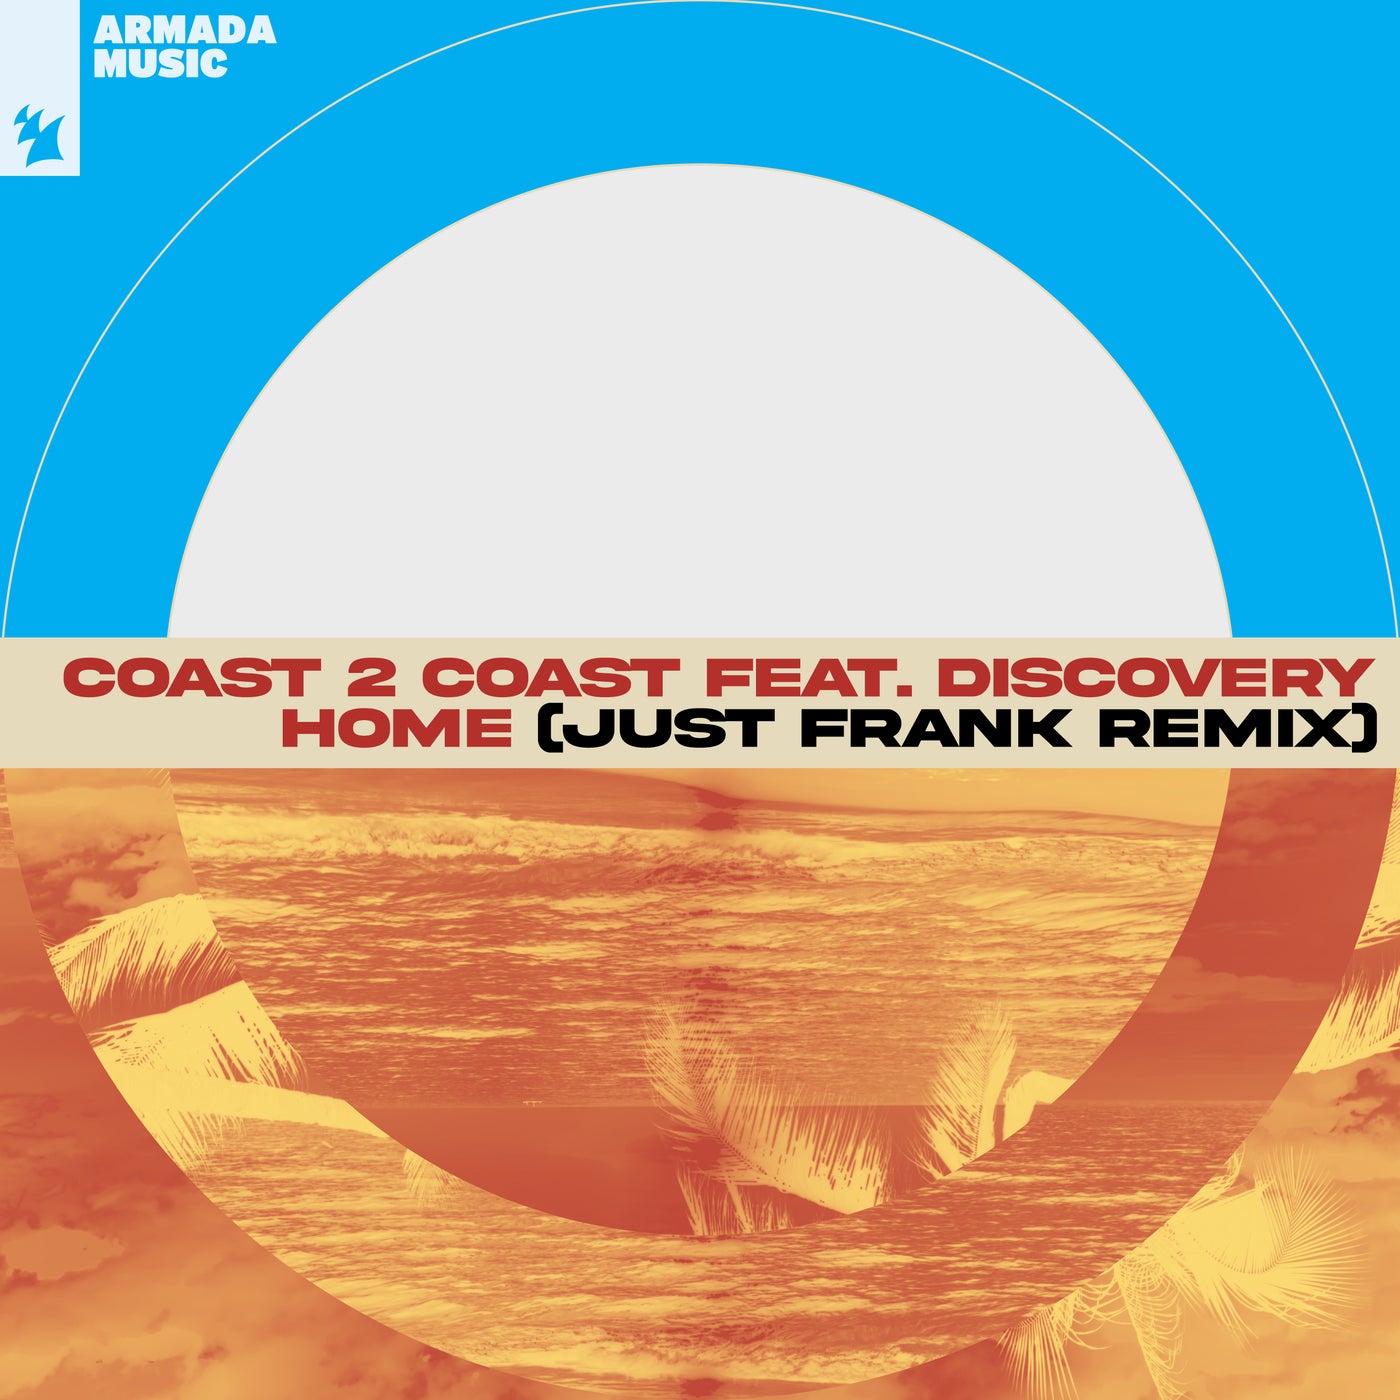 Home - Just Frank Remix